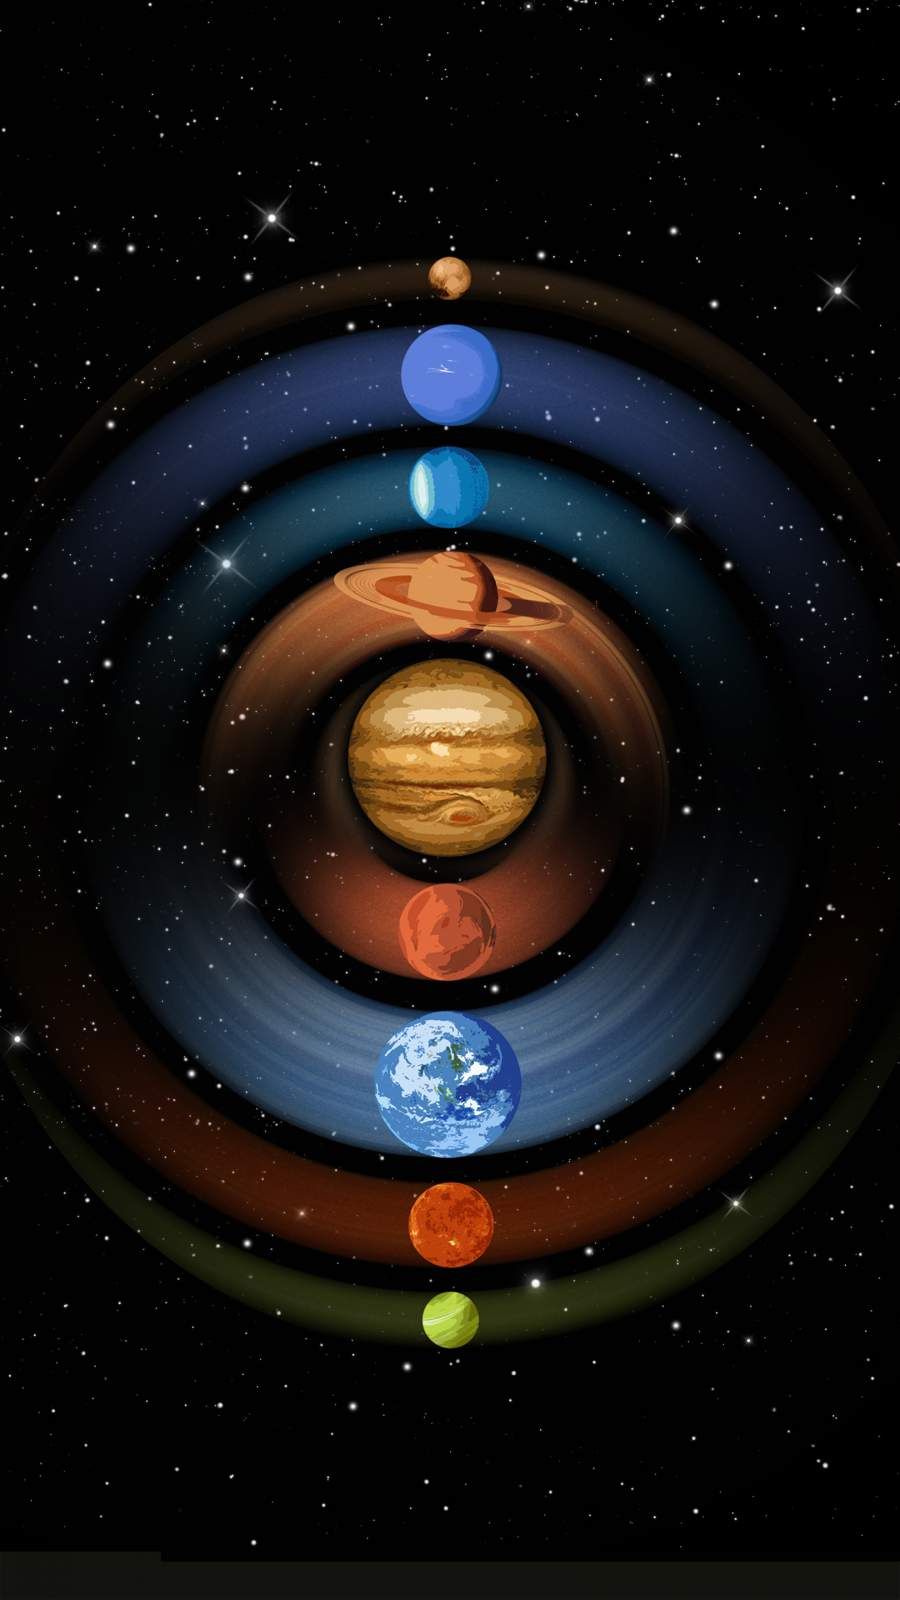 43+] Moving Solar System Wallpaper - WallpaperSafari